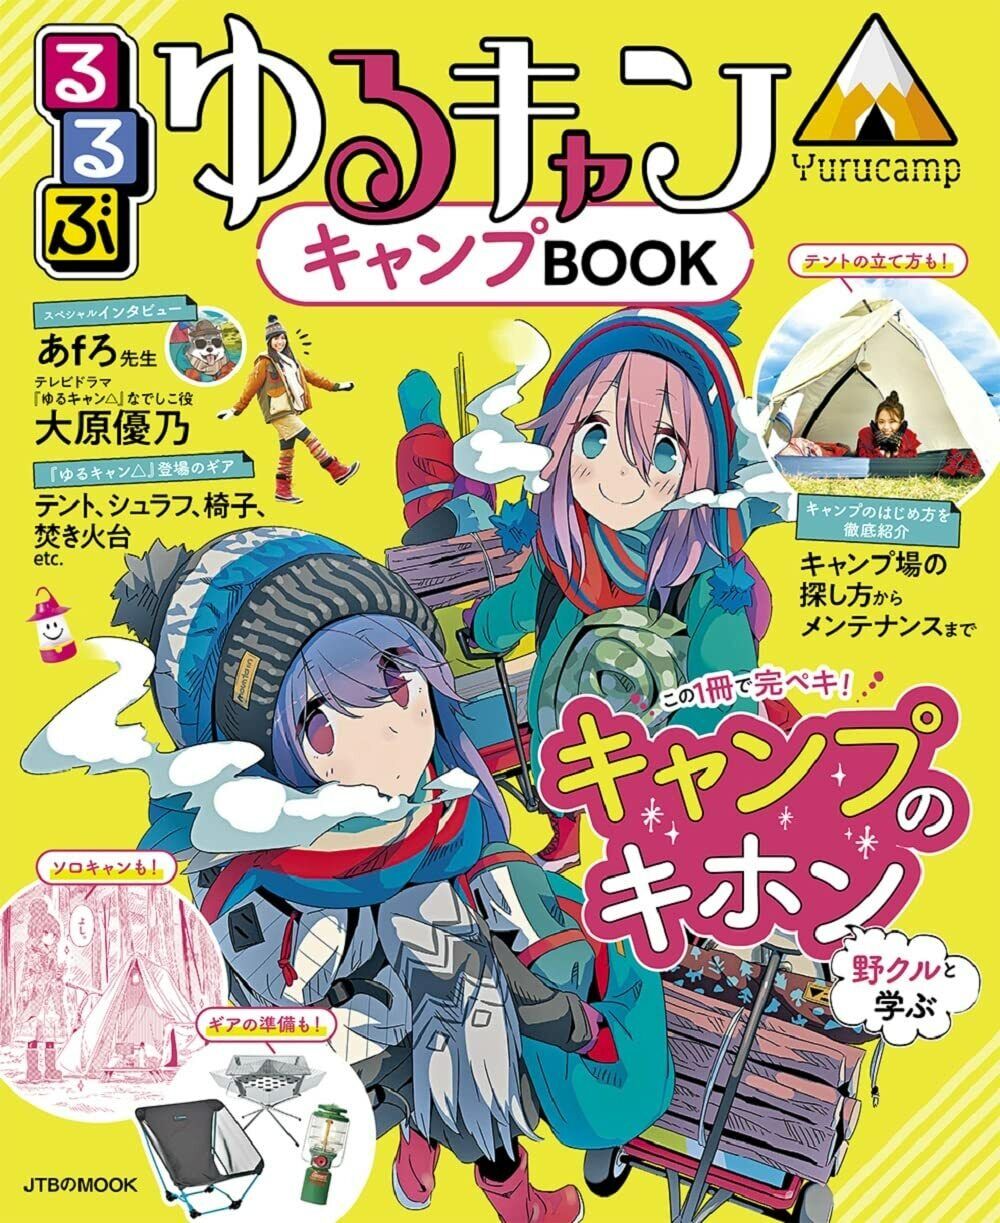 Rurubu Laid Back Camp Yuru Camp ?E Camp Book Illustration Art & Camp Guide Japan